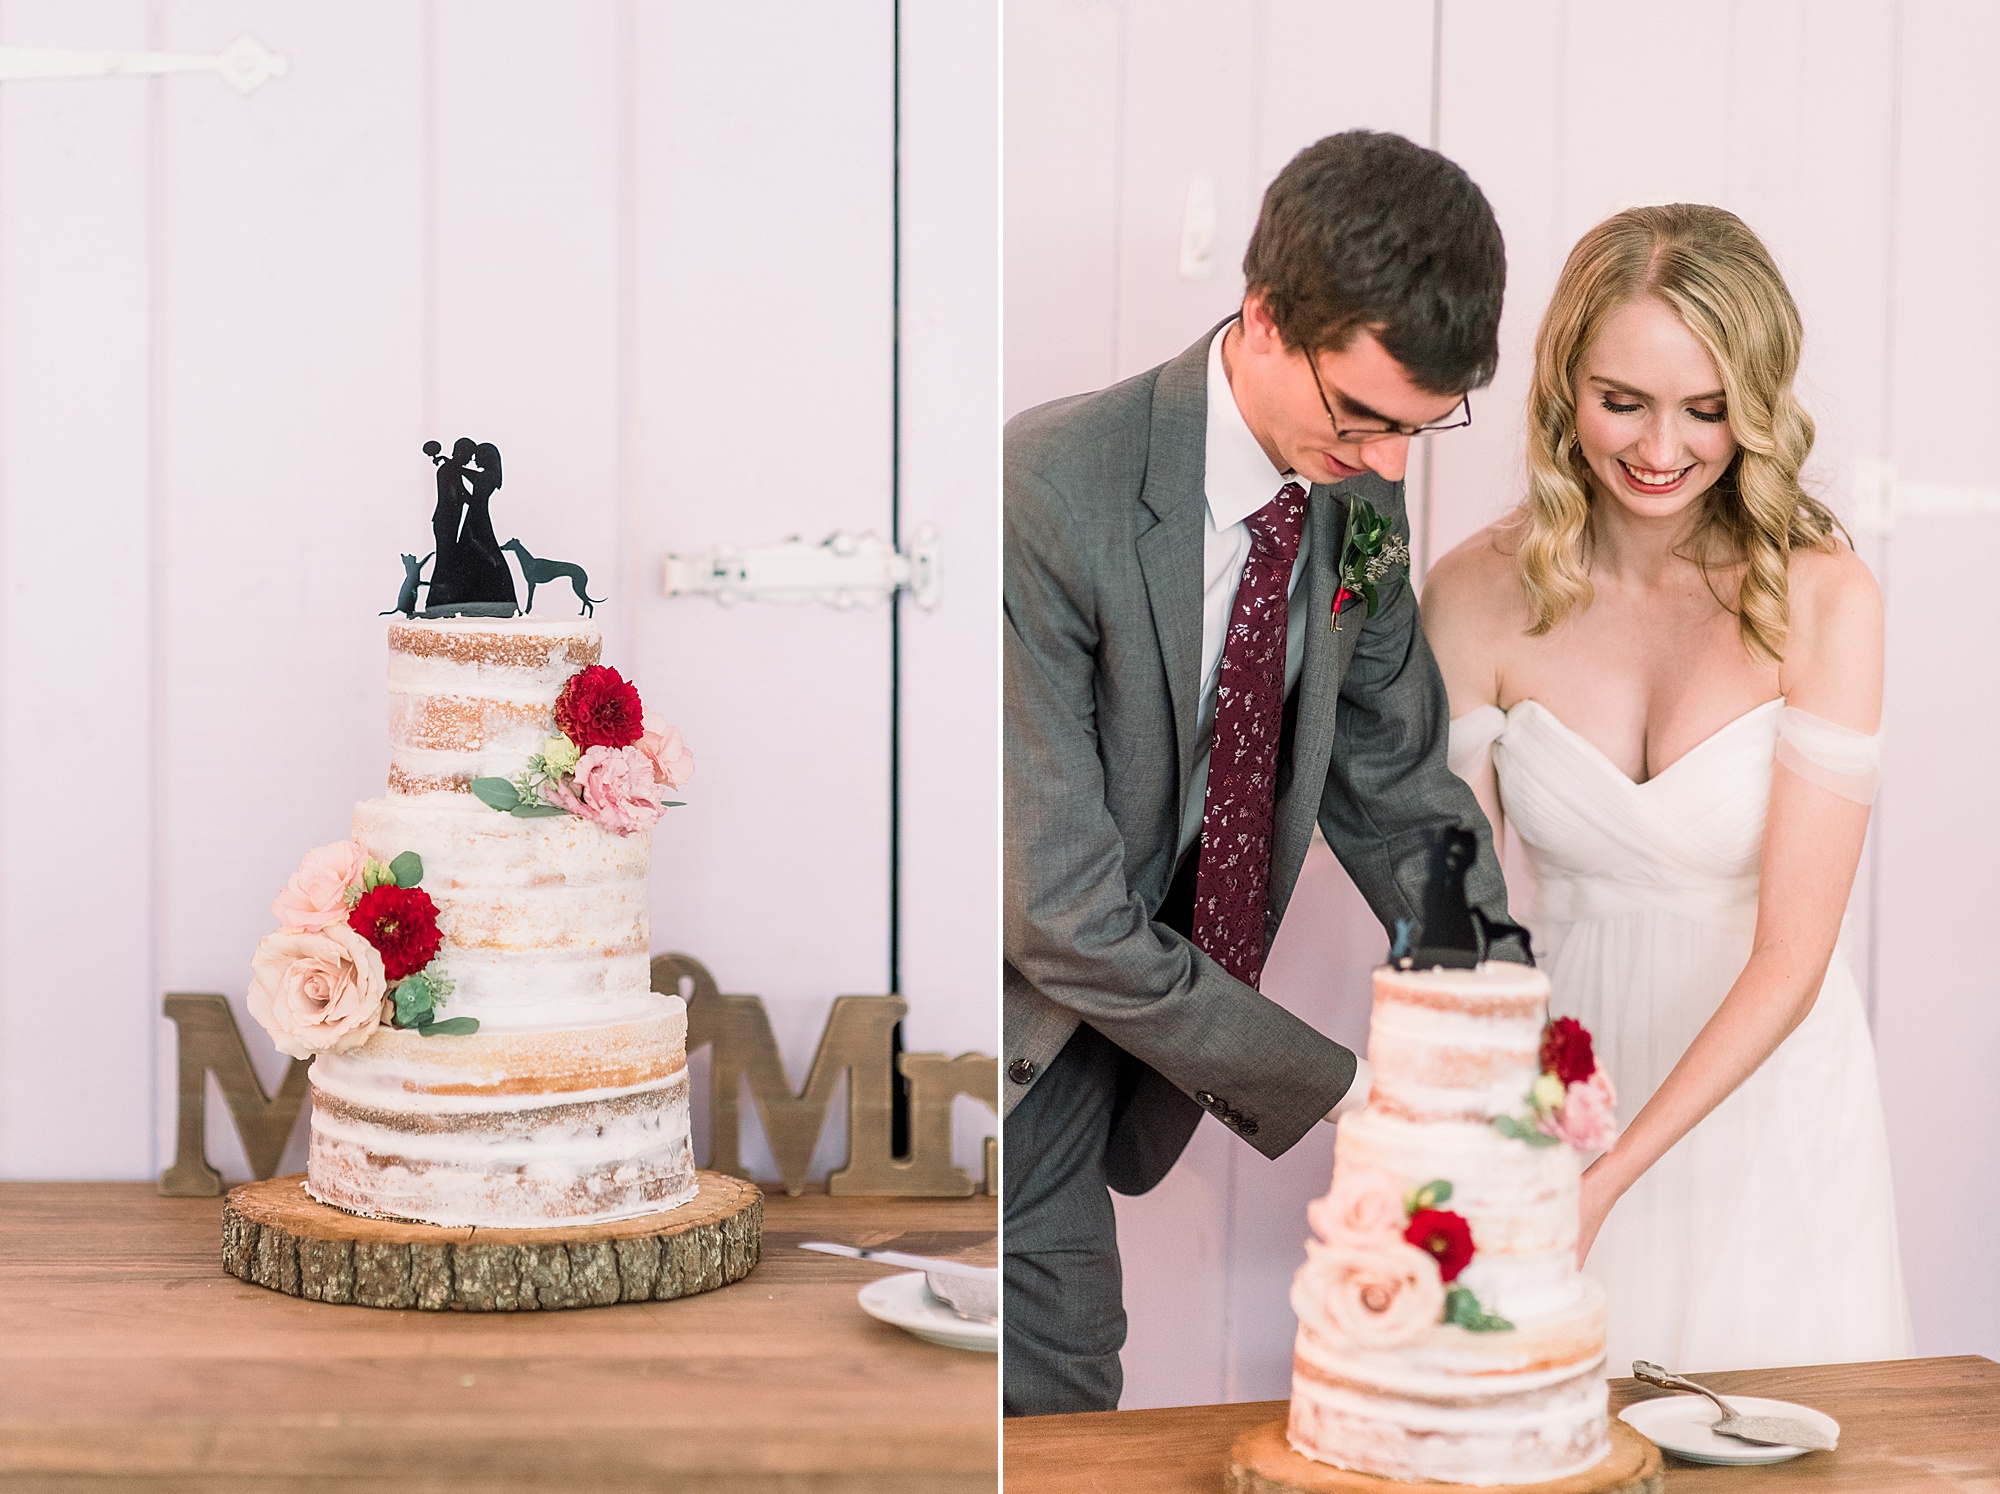 newlyweds cut wedding cake during wedding reception at 1812 Hitching Post